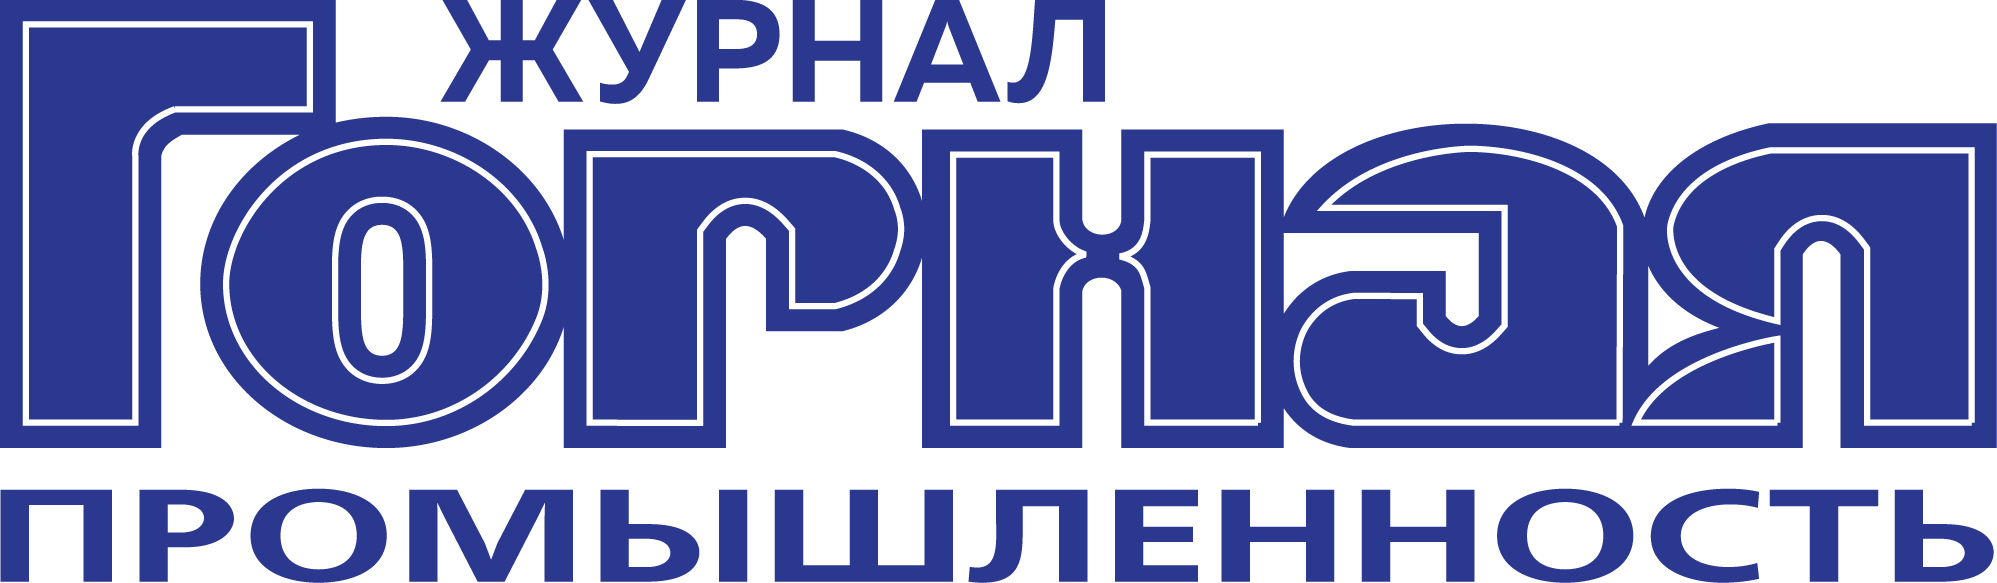 gp_logo (1)